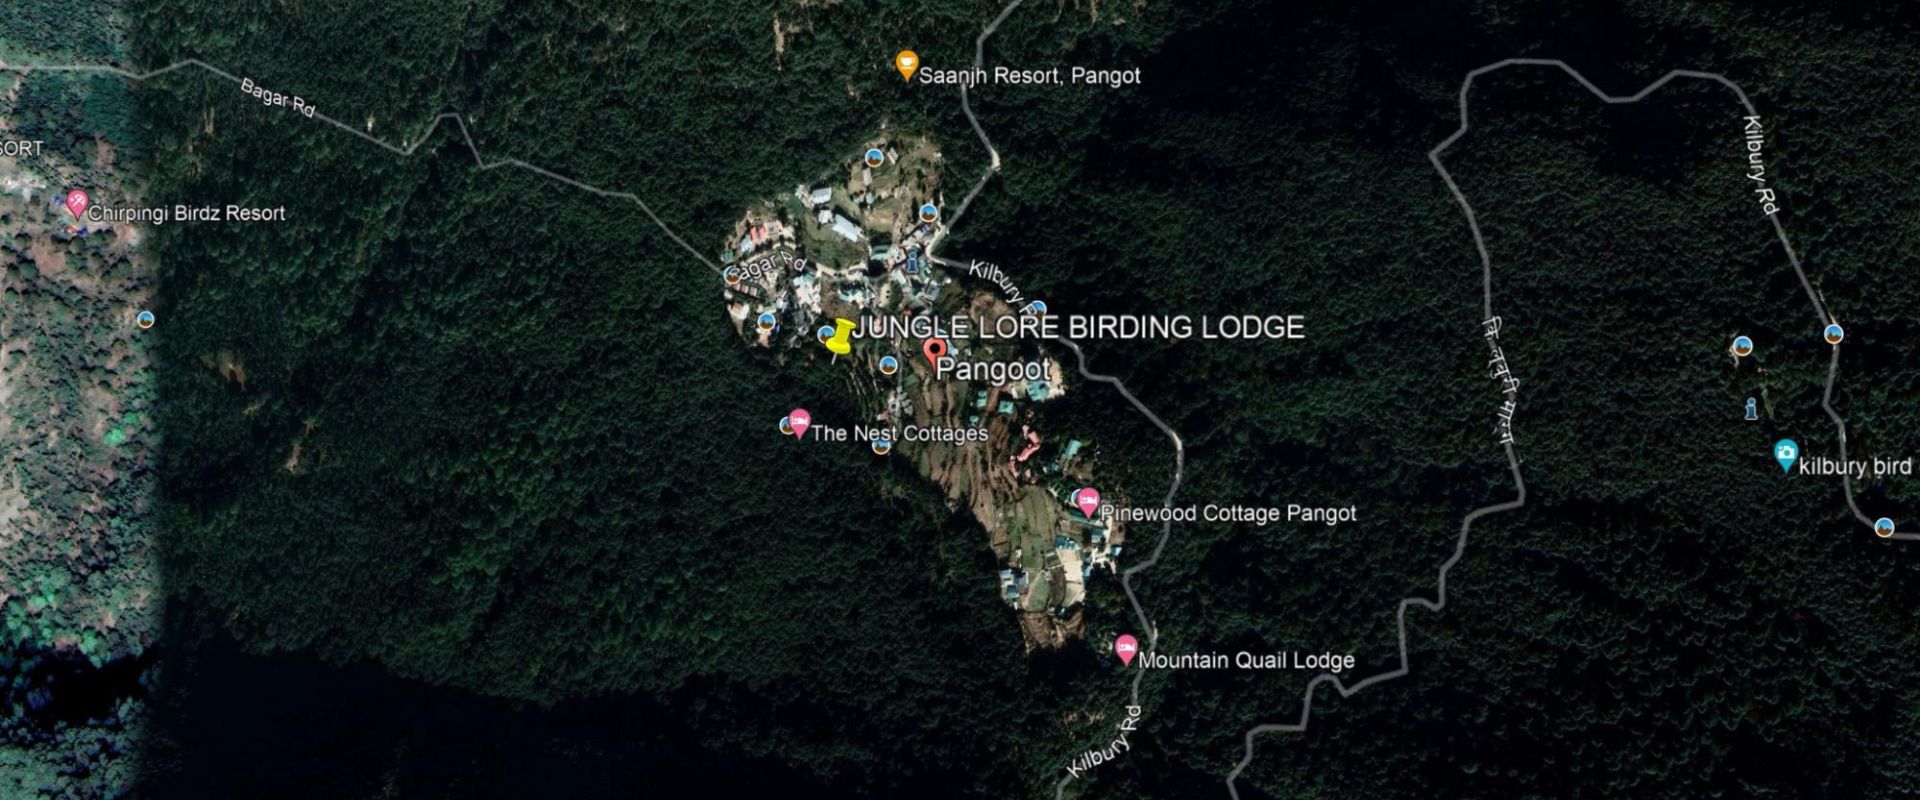 Jungle Lore Birding Lodge Location